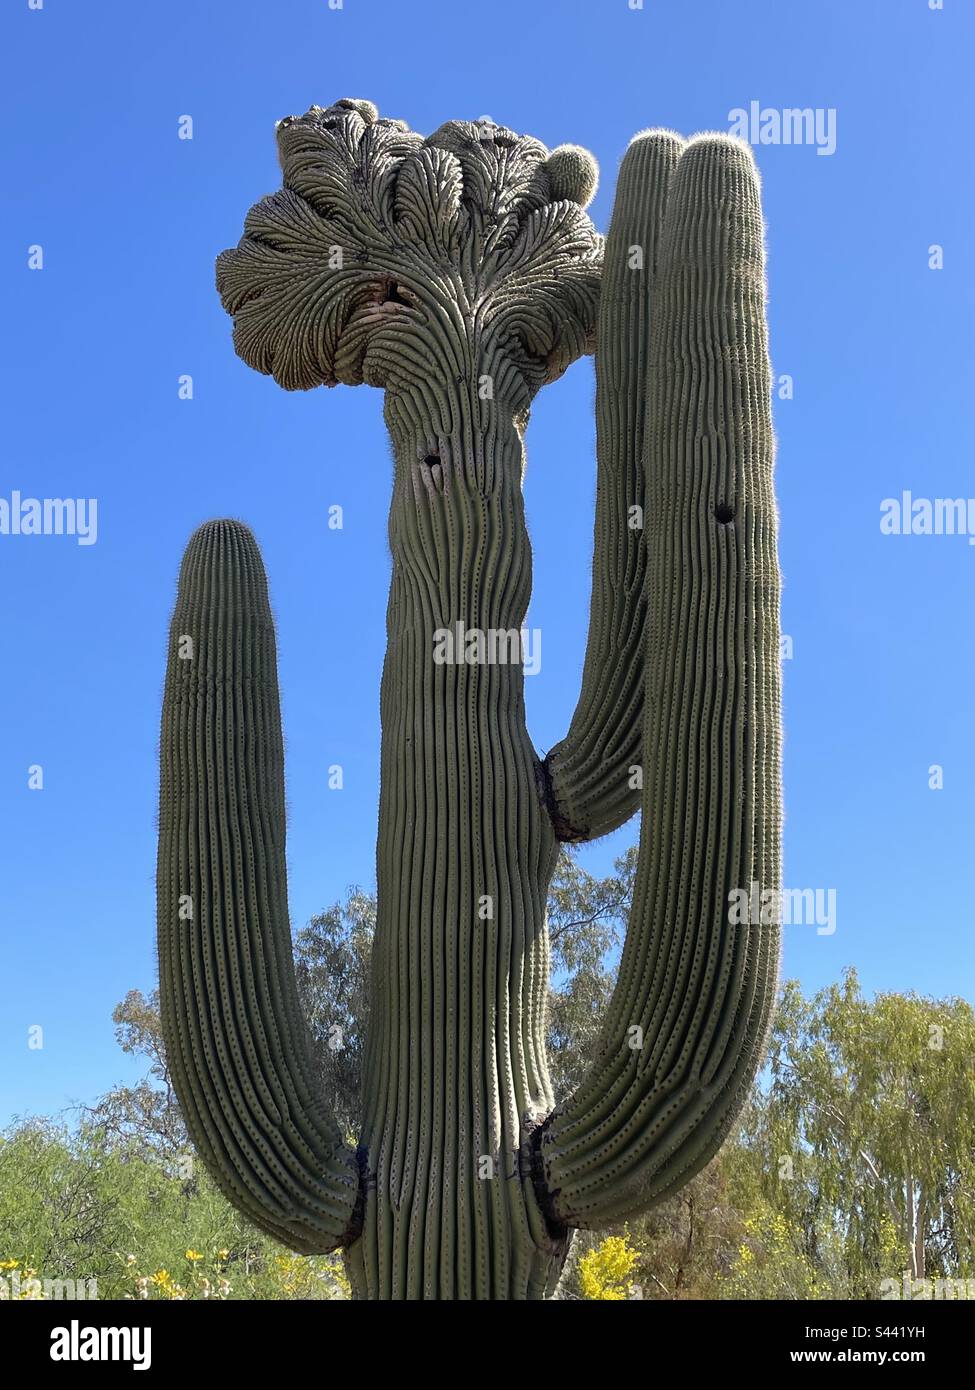 Riesen-Saguaro-Kaktus, brillanter blauer Himmel, Sonoran-Wüste, Phoenix, Arizona Stockfoto